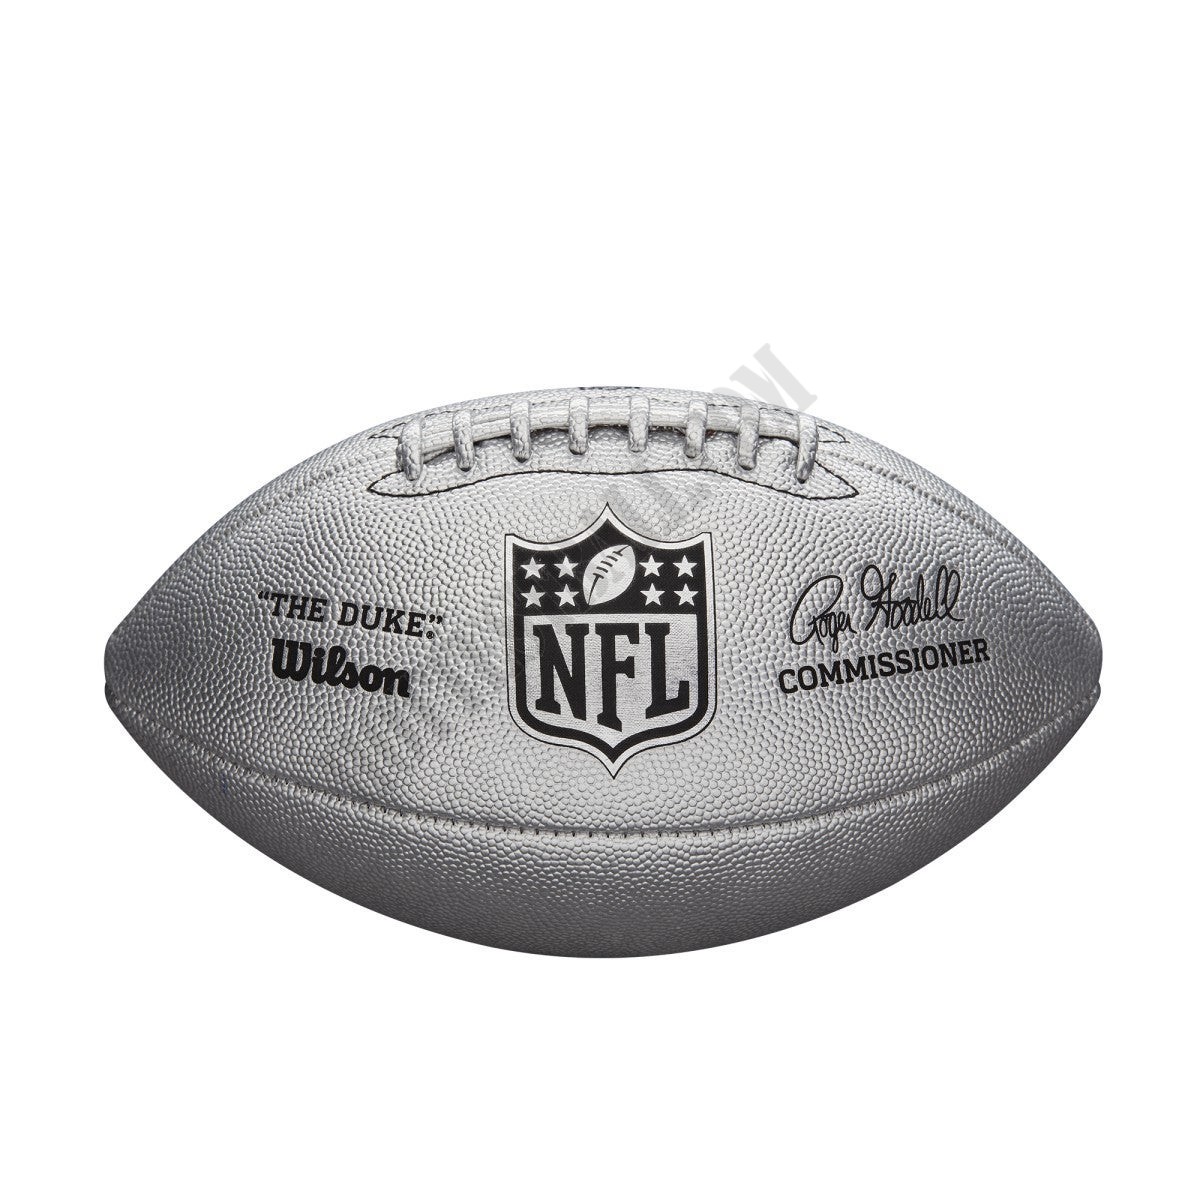 NFL The Duke Metallic Edition - Silver - Wilson Discount Store - NFL The Duke Metallic Edition - Silver - Wilson Discount Store